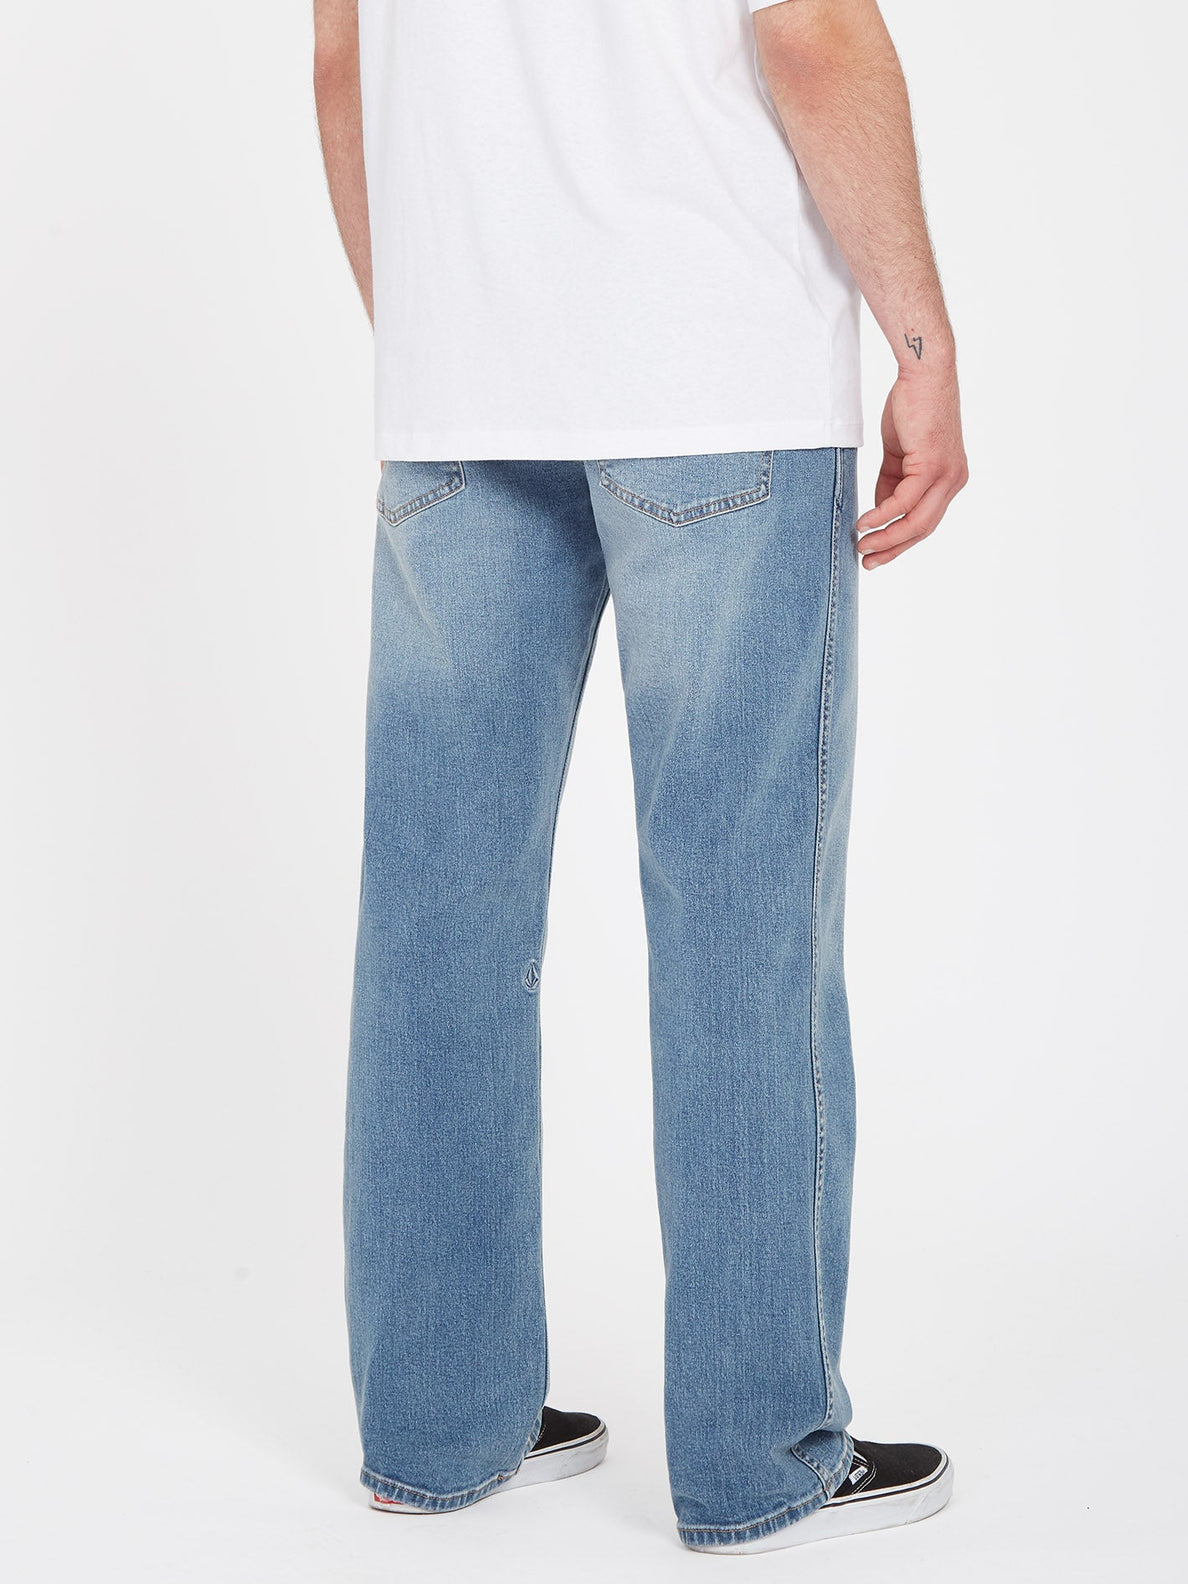 Volcom Modown Denim Jeans – Old Town Indigo